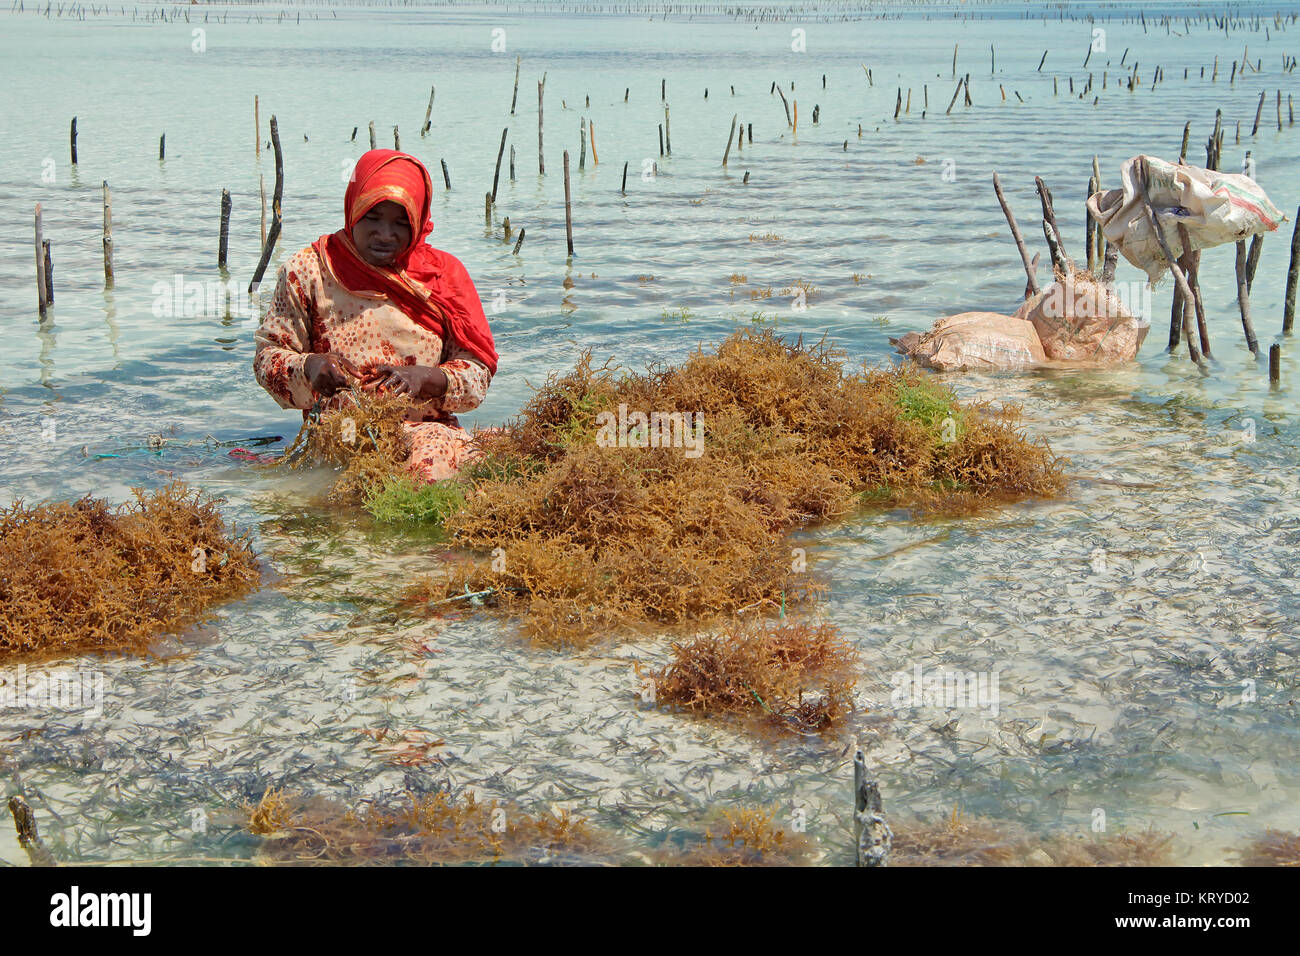 ZANZIBAR, TANZANIA - OCTOBER 25, 2014: Unidentified woman harvesting cultivated seaweed in the shallow, clear coastal waters of Zanzibar island Stock Photo